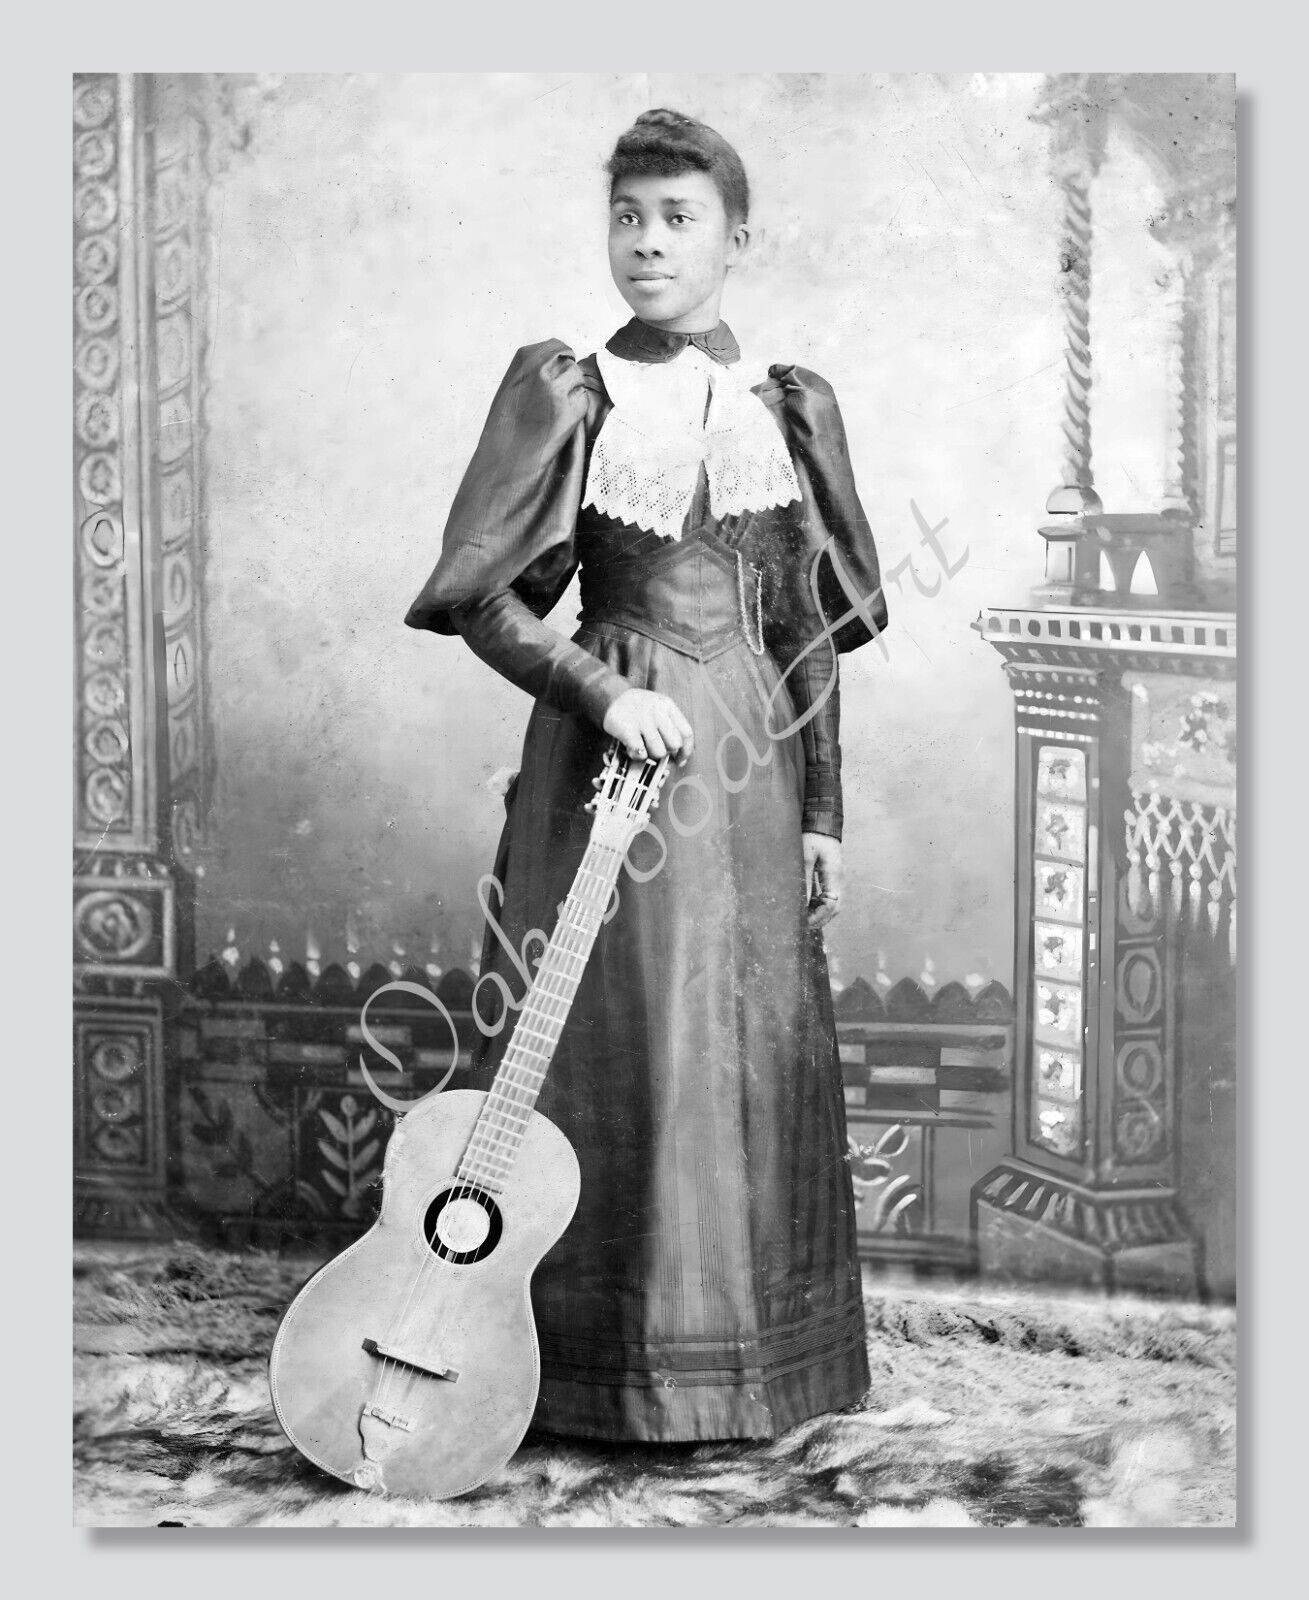 Black Victorian Woman with Guitar c1890s, Vintage Photo Reprint